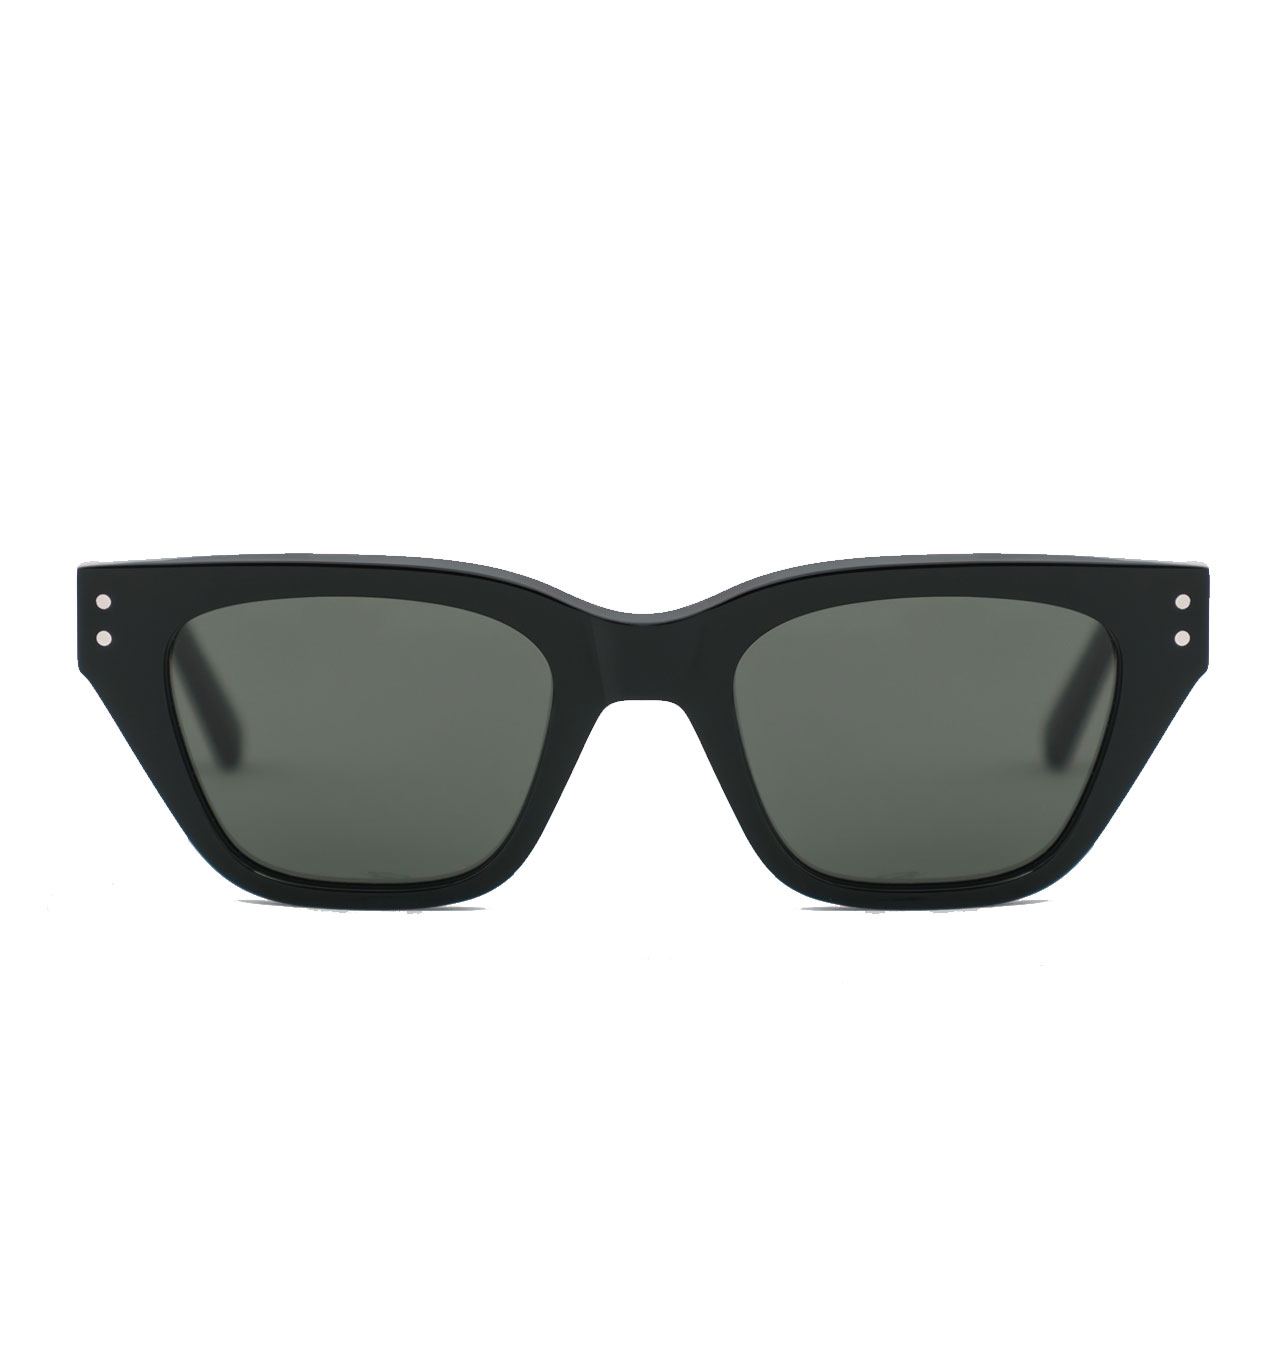 Monokel Eyewear - Memphis Black Sunglasses - Green Solid Lens